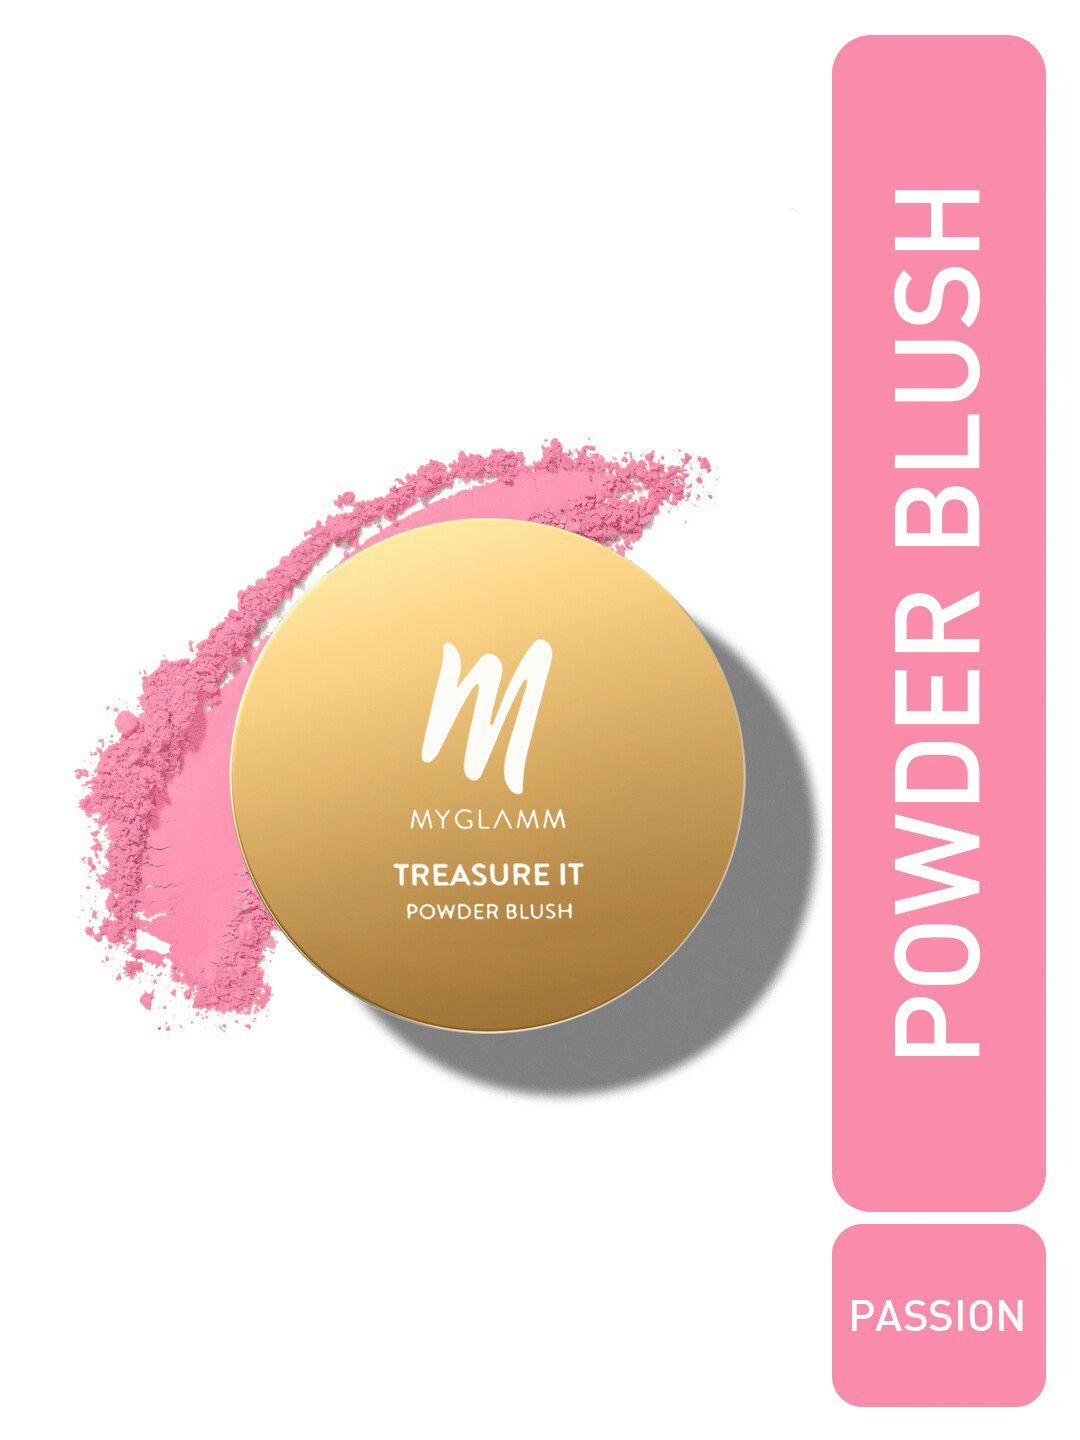 myglamm treasure it powder matte blush - 4g - passion